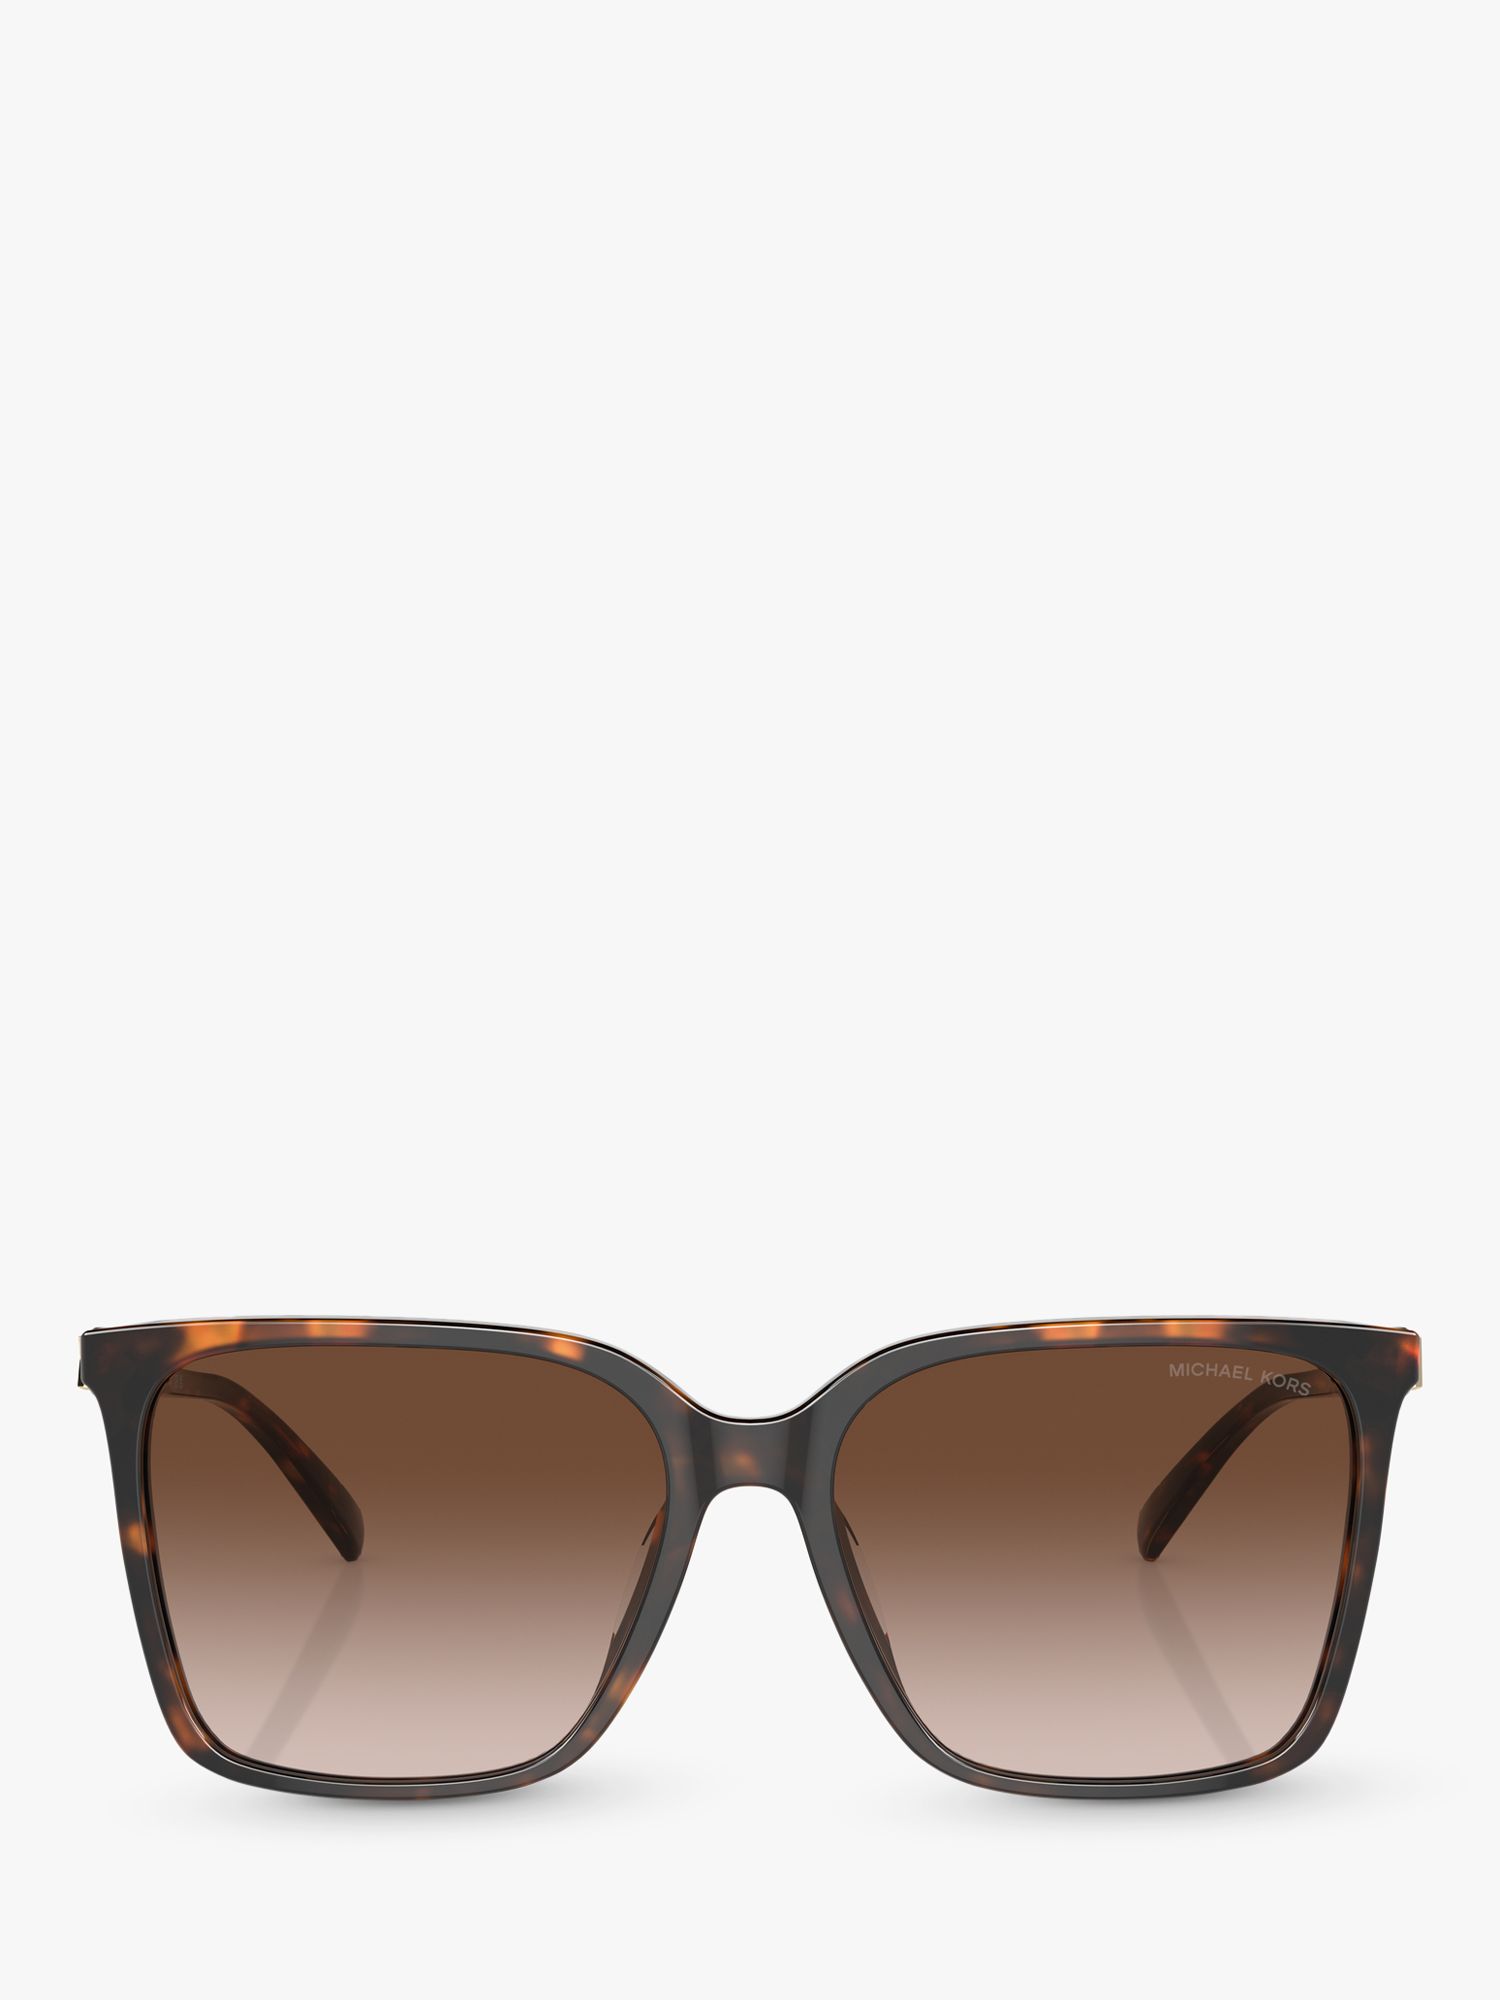 Buy Michael Kors MK2197F Women's Canberra Square Sunglasses, Dark Tortoise/Brown Gradient Online at johnlewis.com